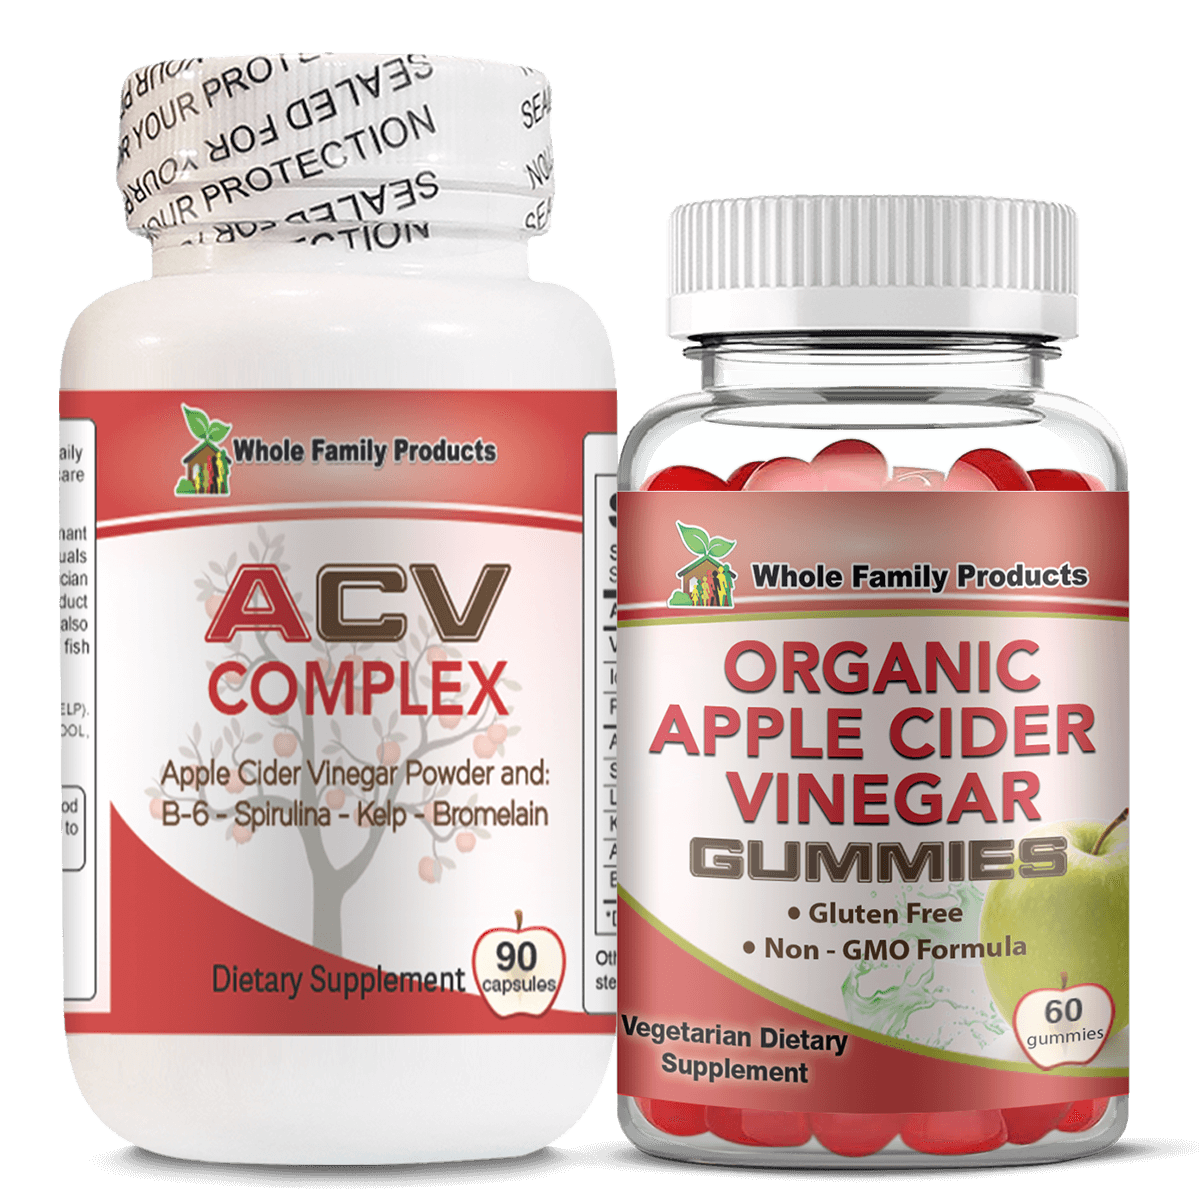 Organic Apple Cider Vinegar Gummies and ACV Complex